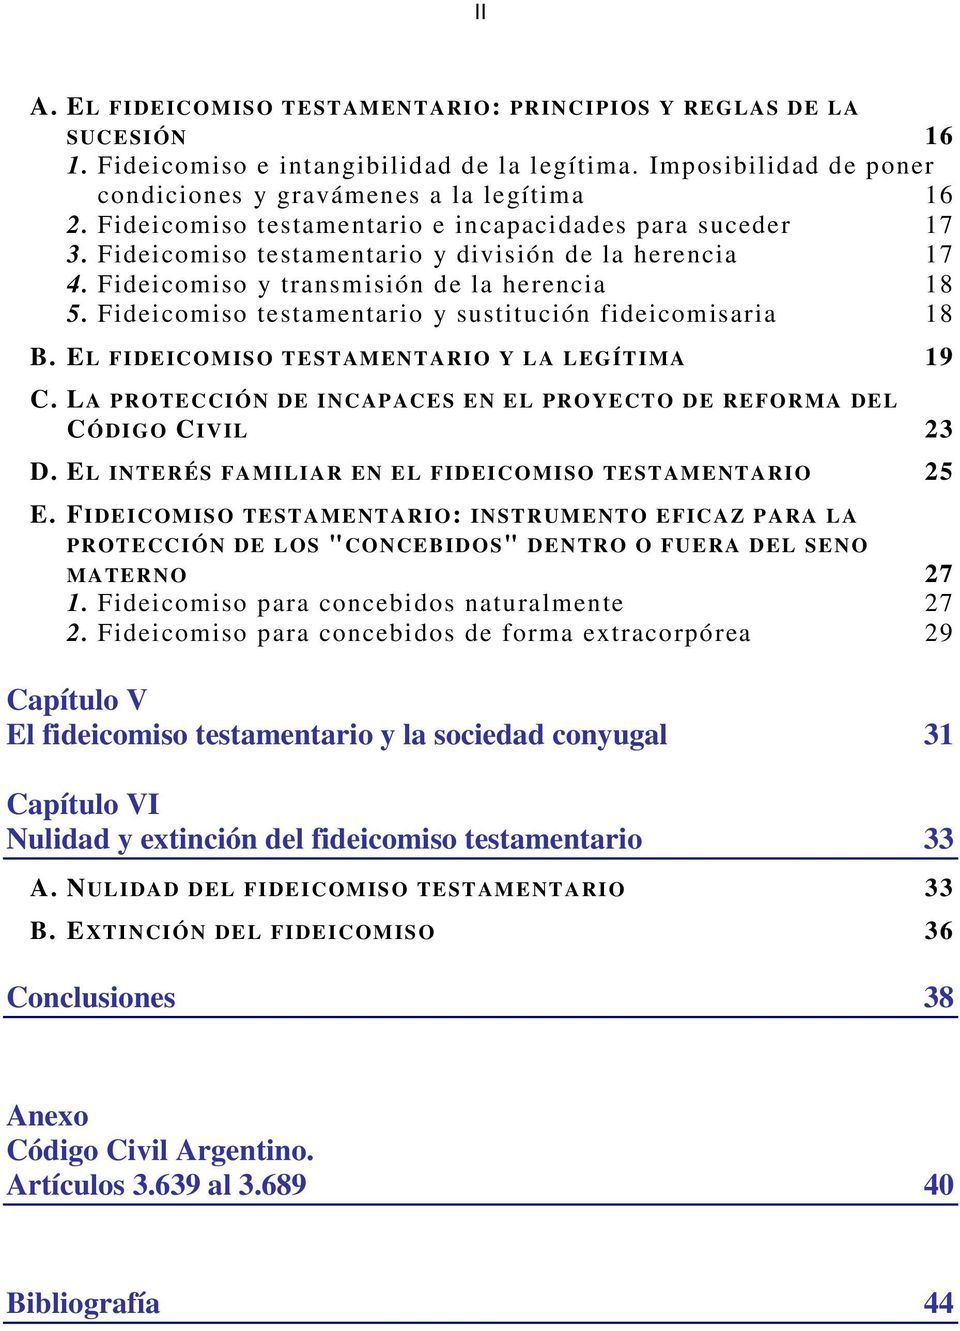 Fideicomiso Testamentario - PDF Free Download